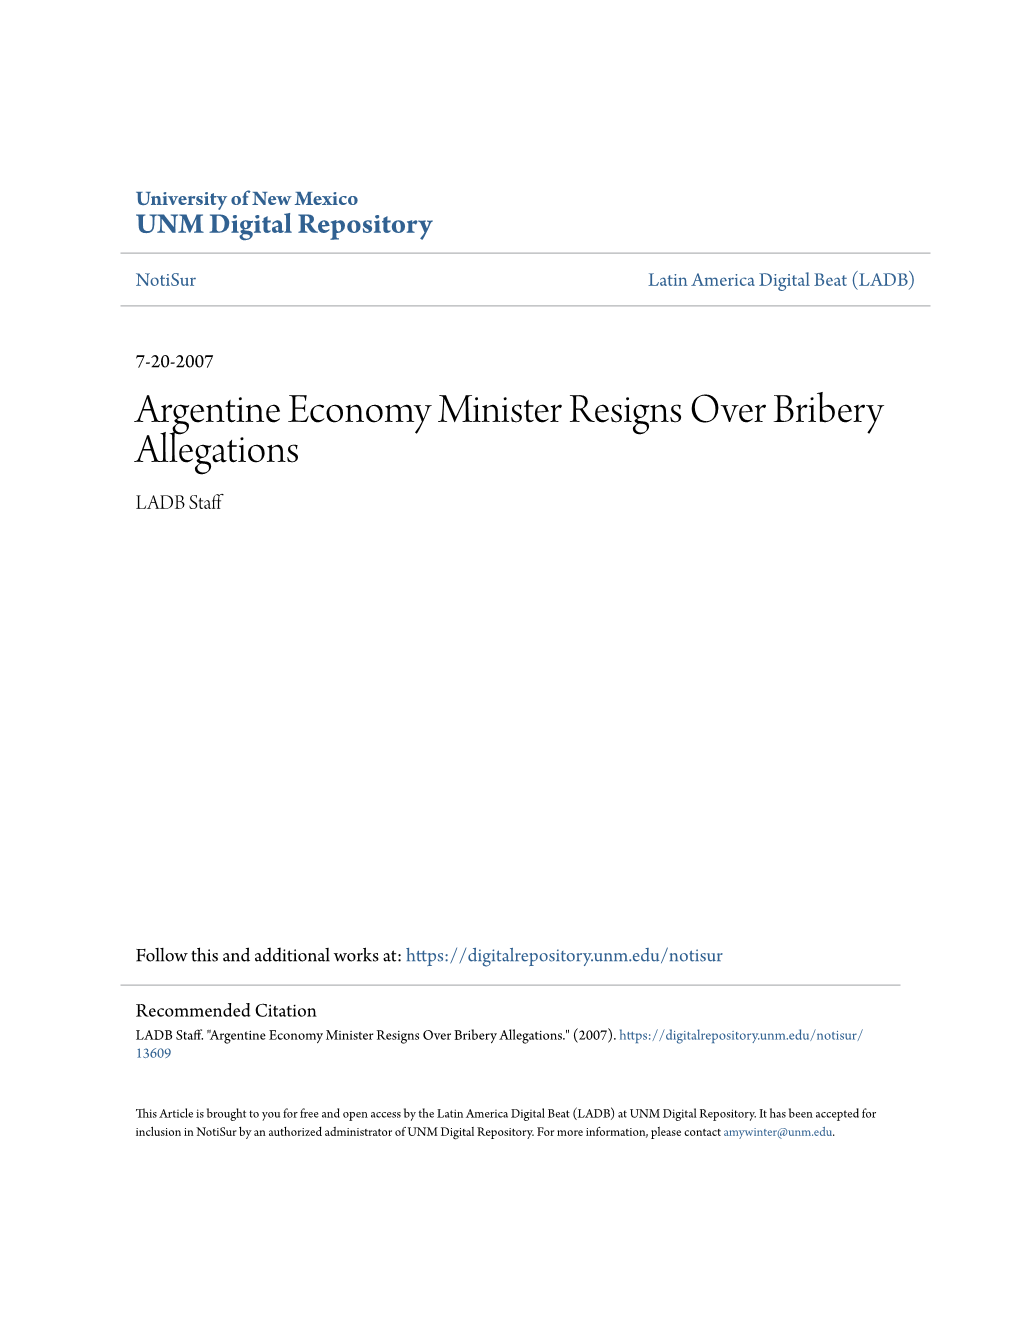 Argentine Economy Minister Resigns Over Bribery Allegations LADB Staff